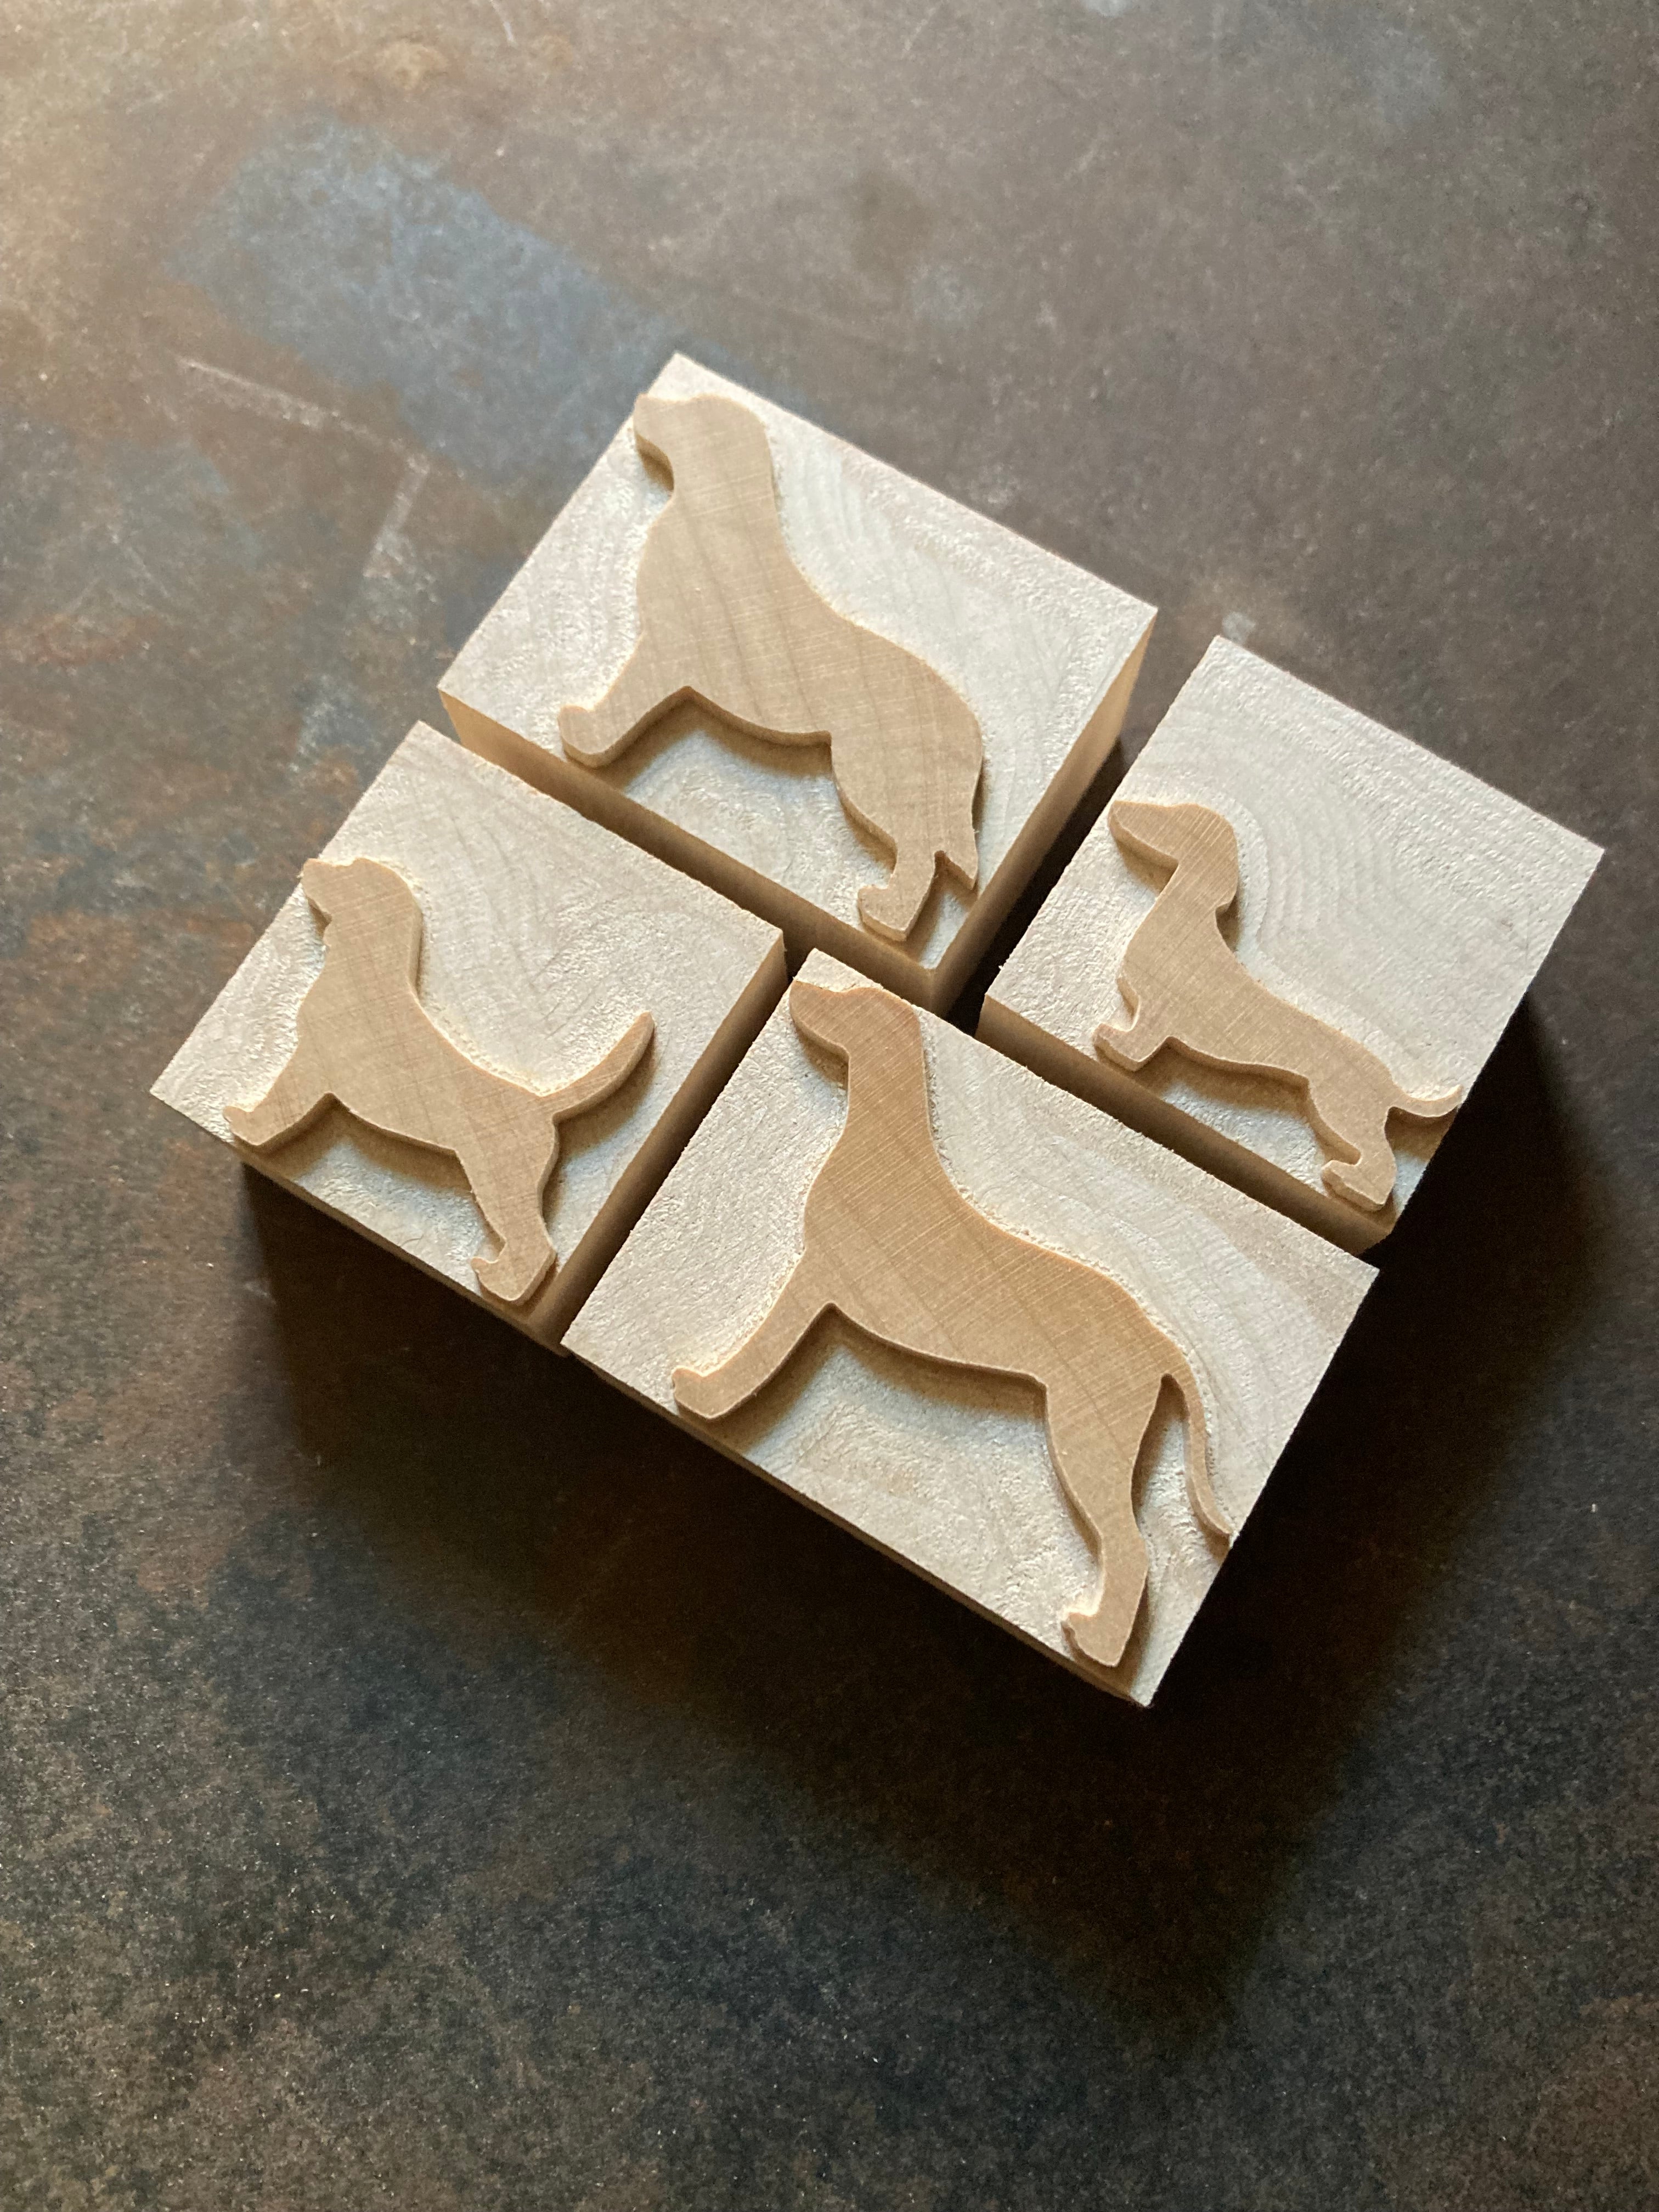 8 line Dog Printing Blocks - 4 different